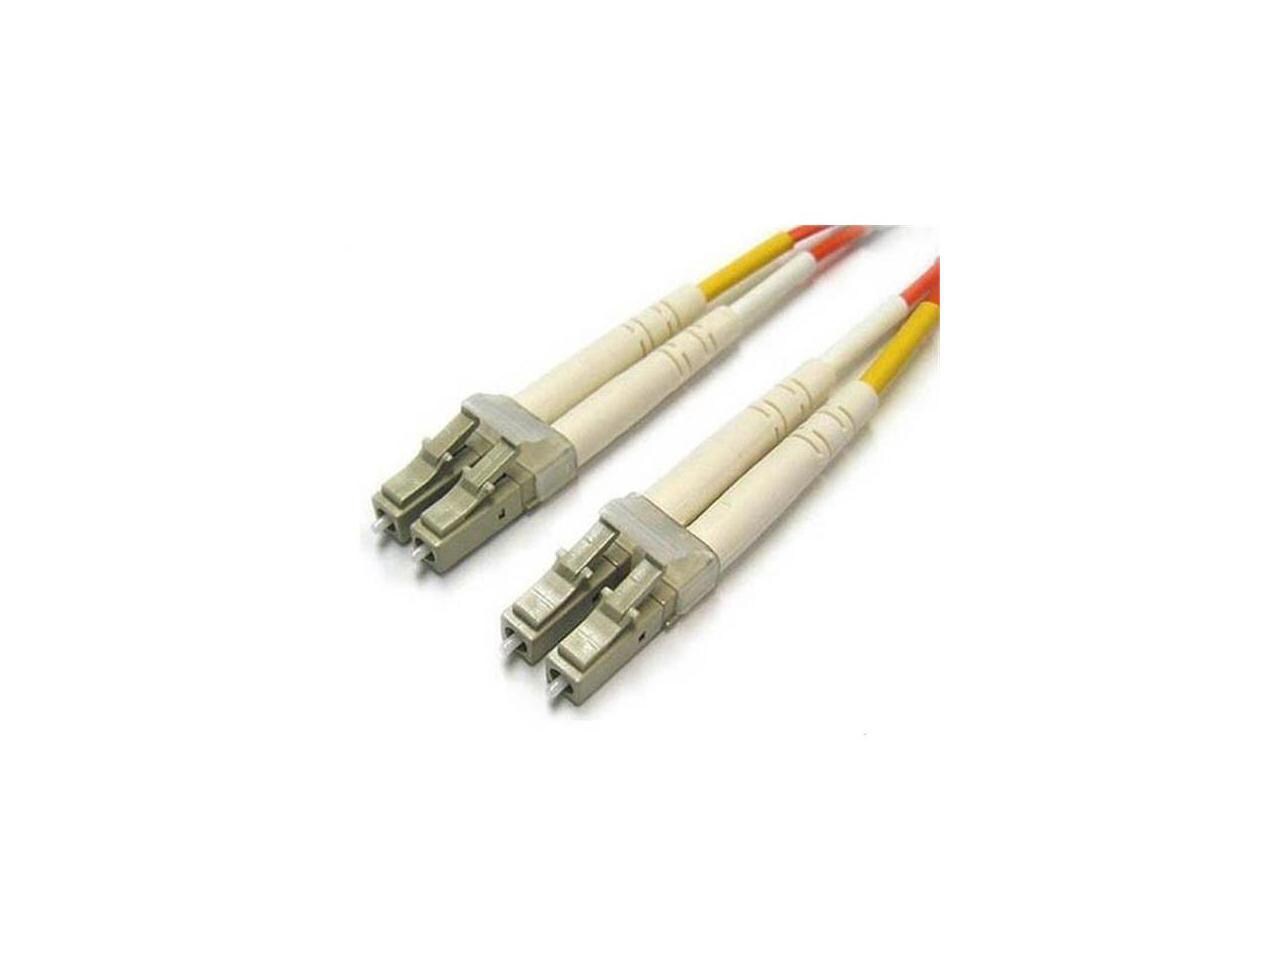 Lenovo Optical Disc Drive Cable Kit - SATA cable kit